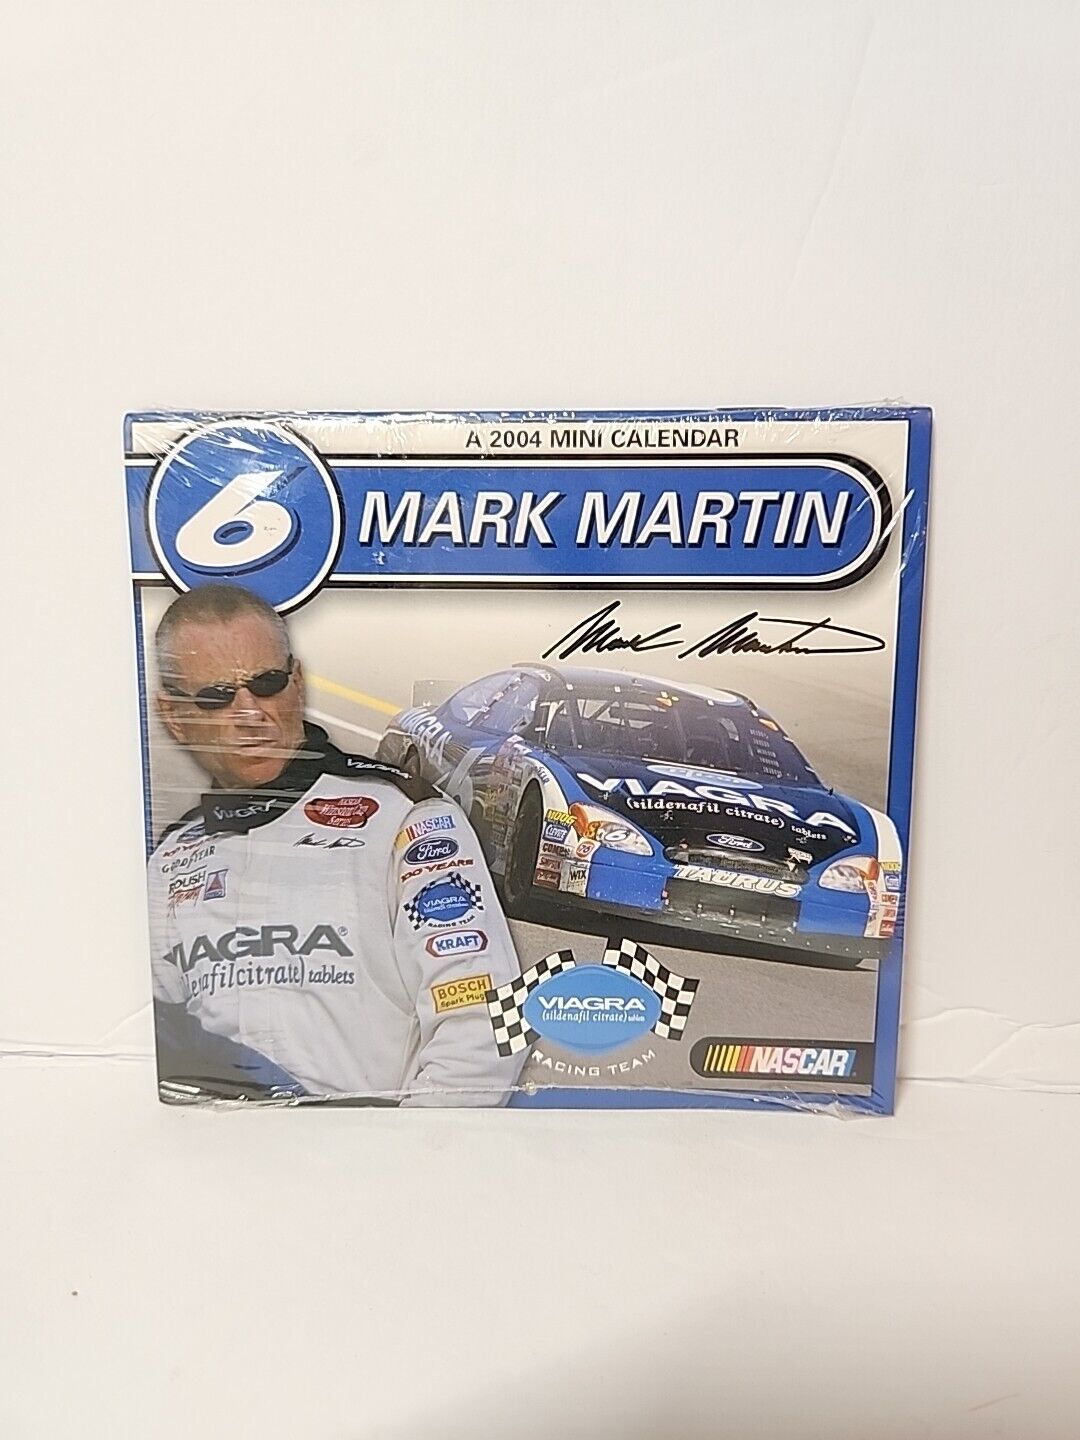 Mark Martin 2004 Mini Calendar, NEW-Sealed, Viagra Roush Racing